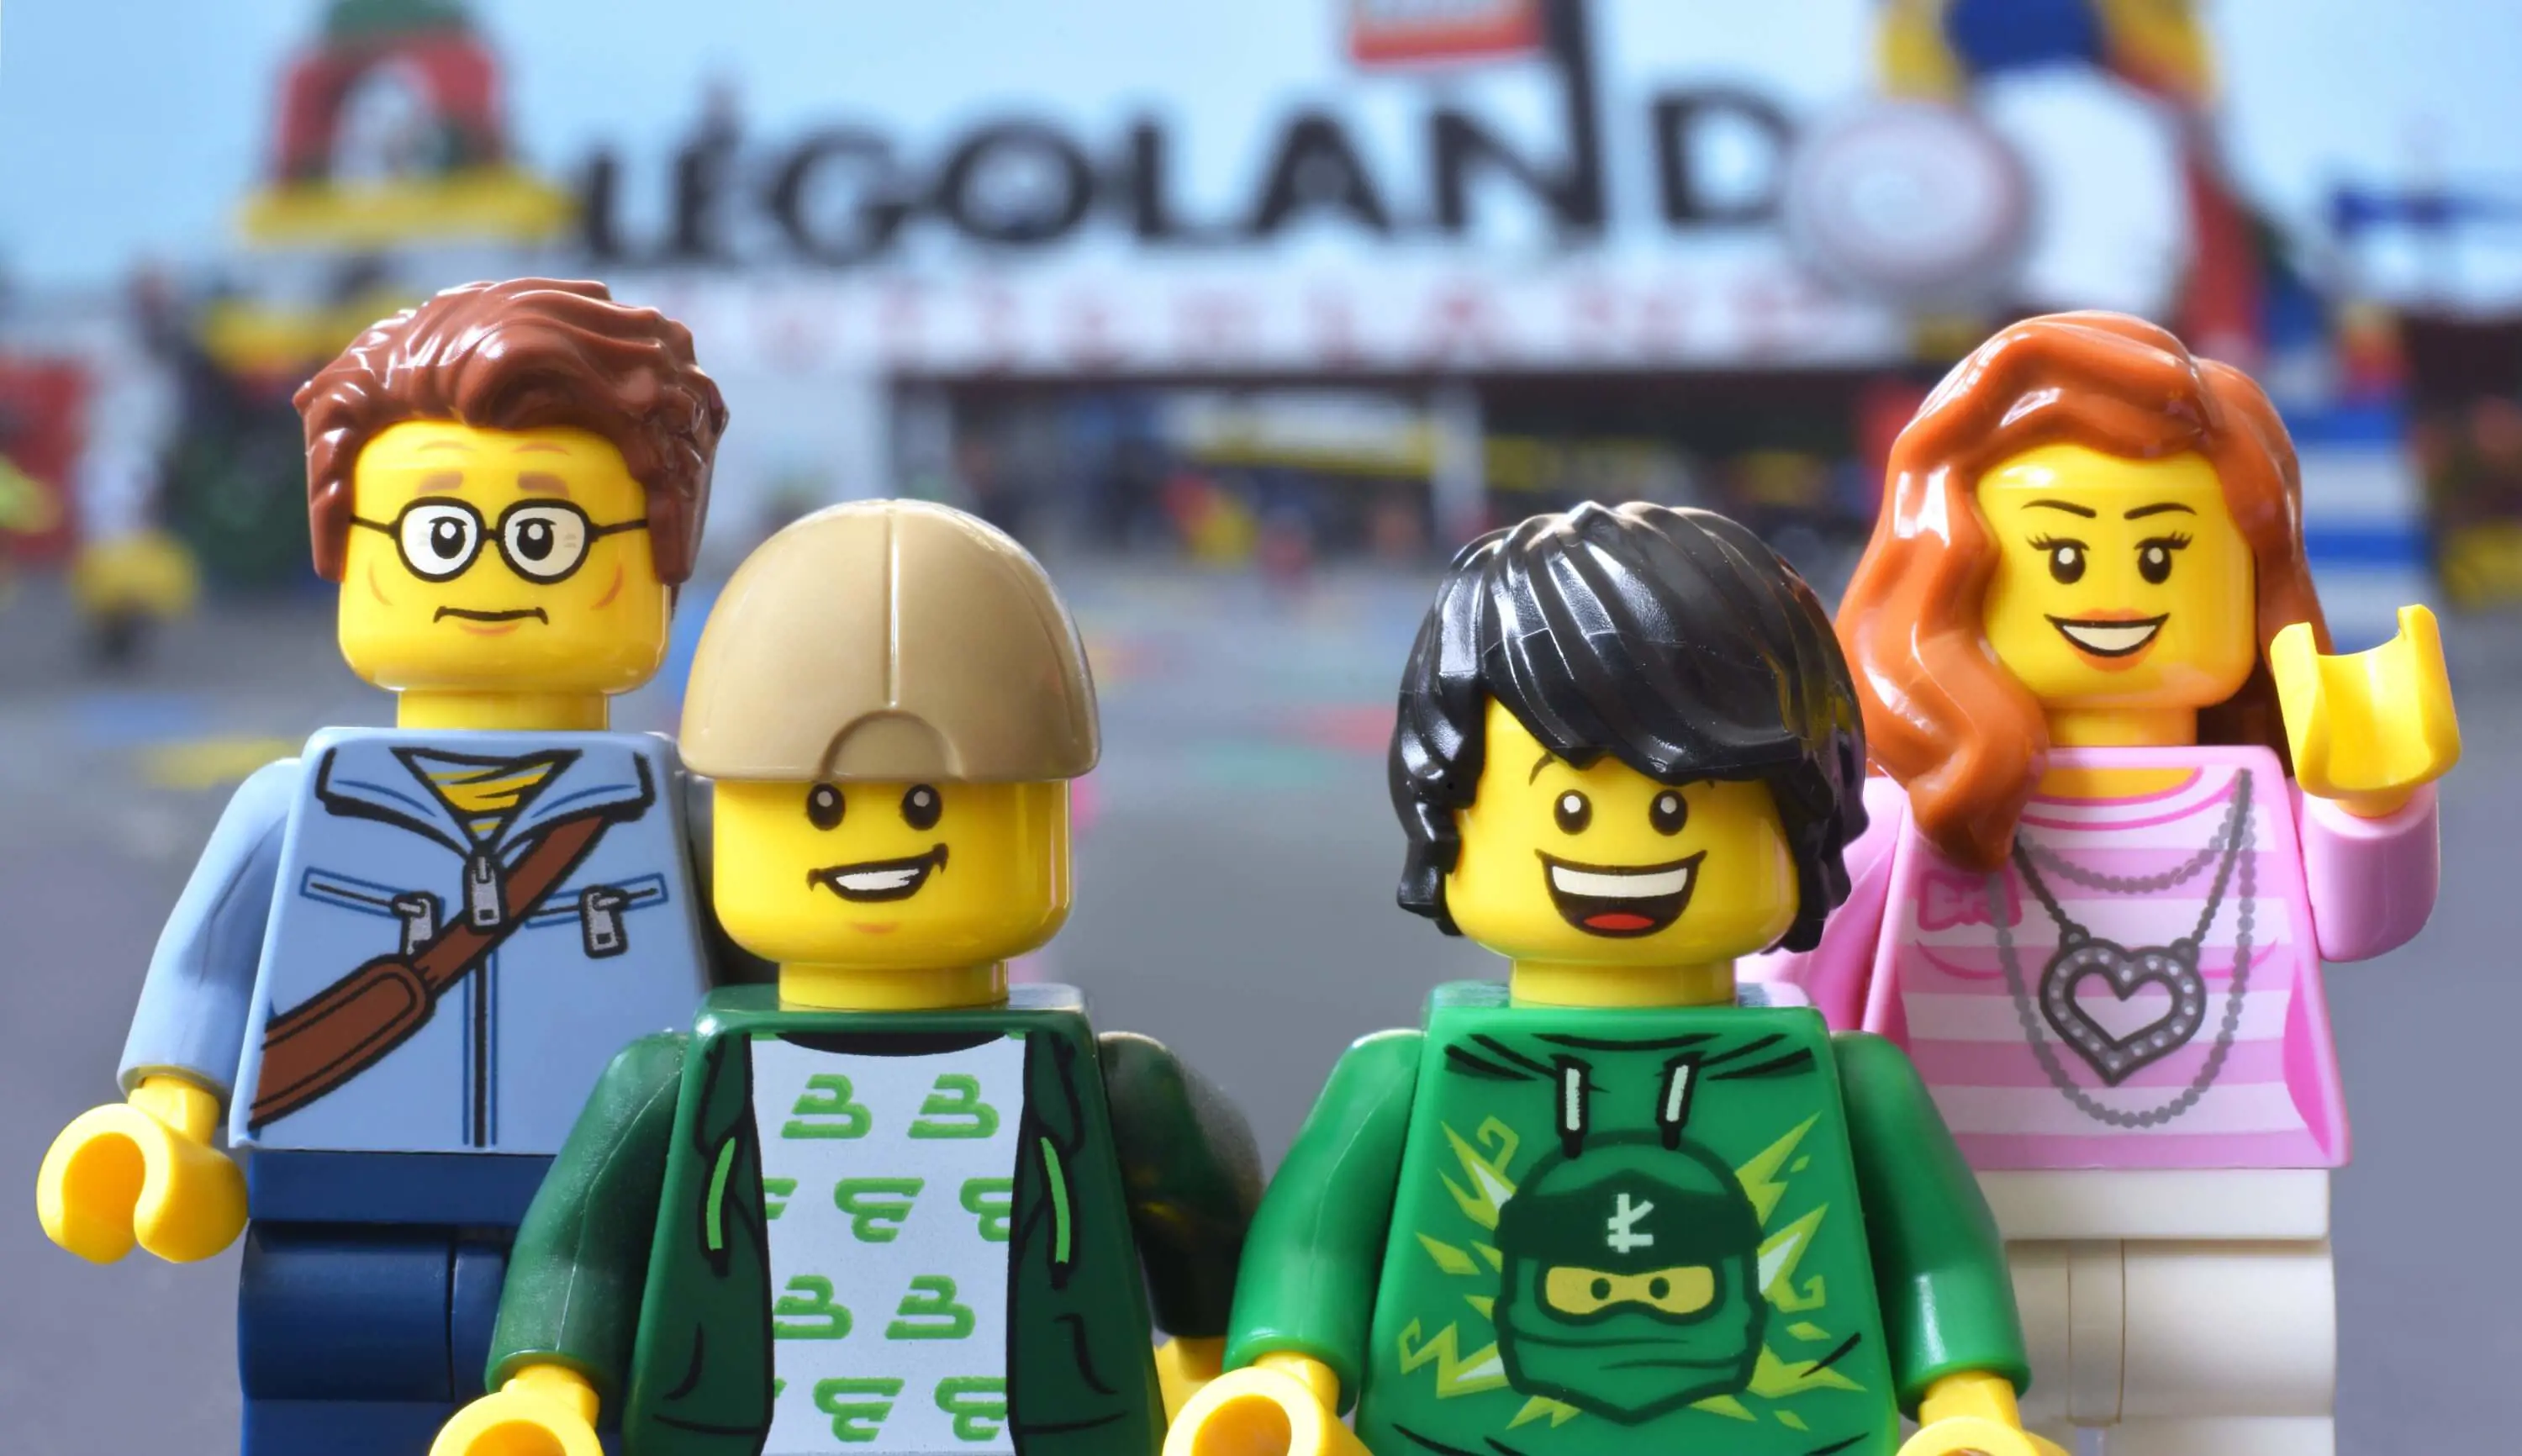 Manchester - Legoland Discovery Centre